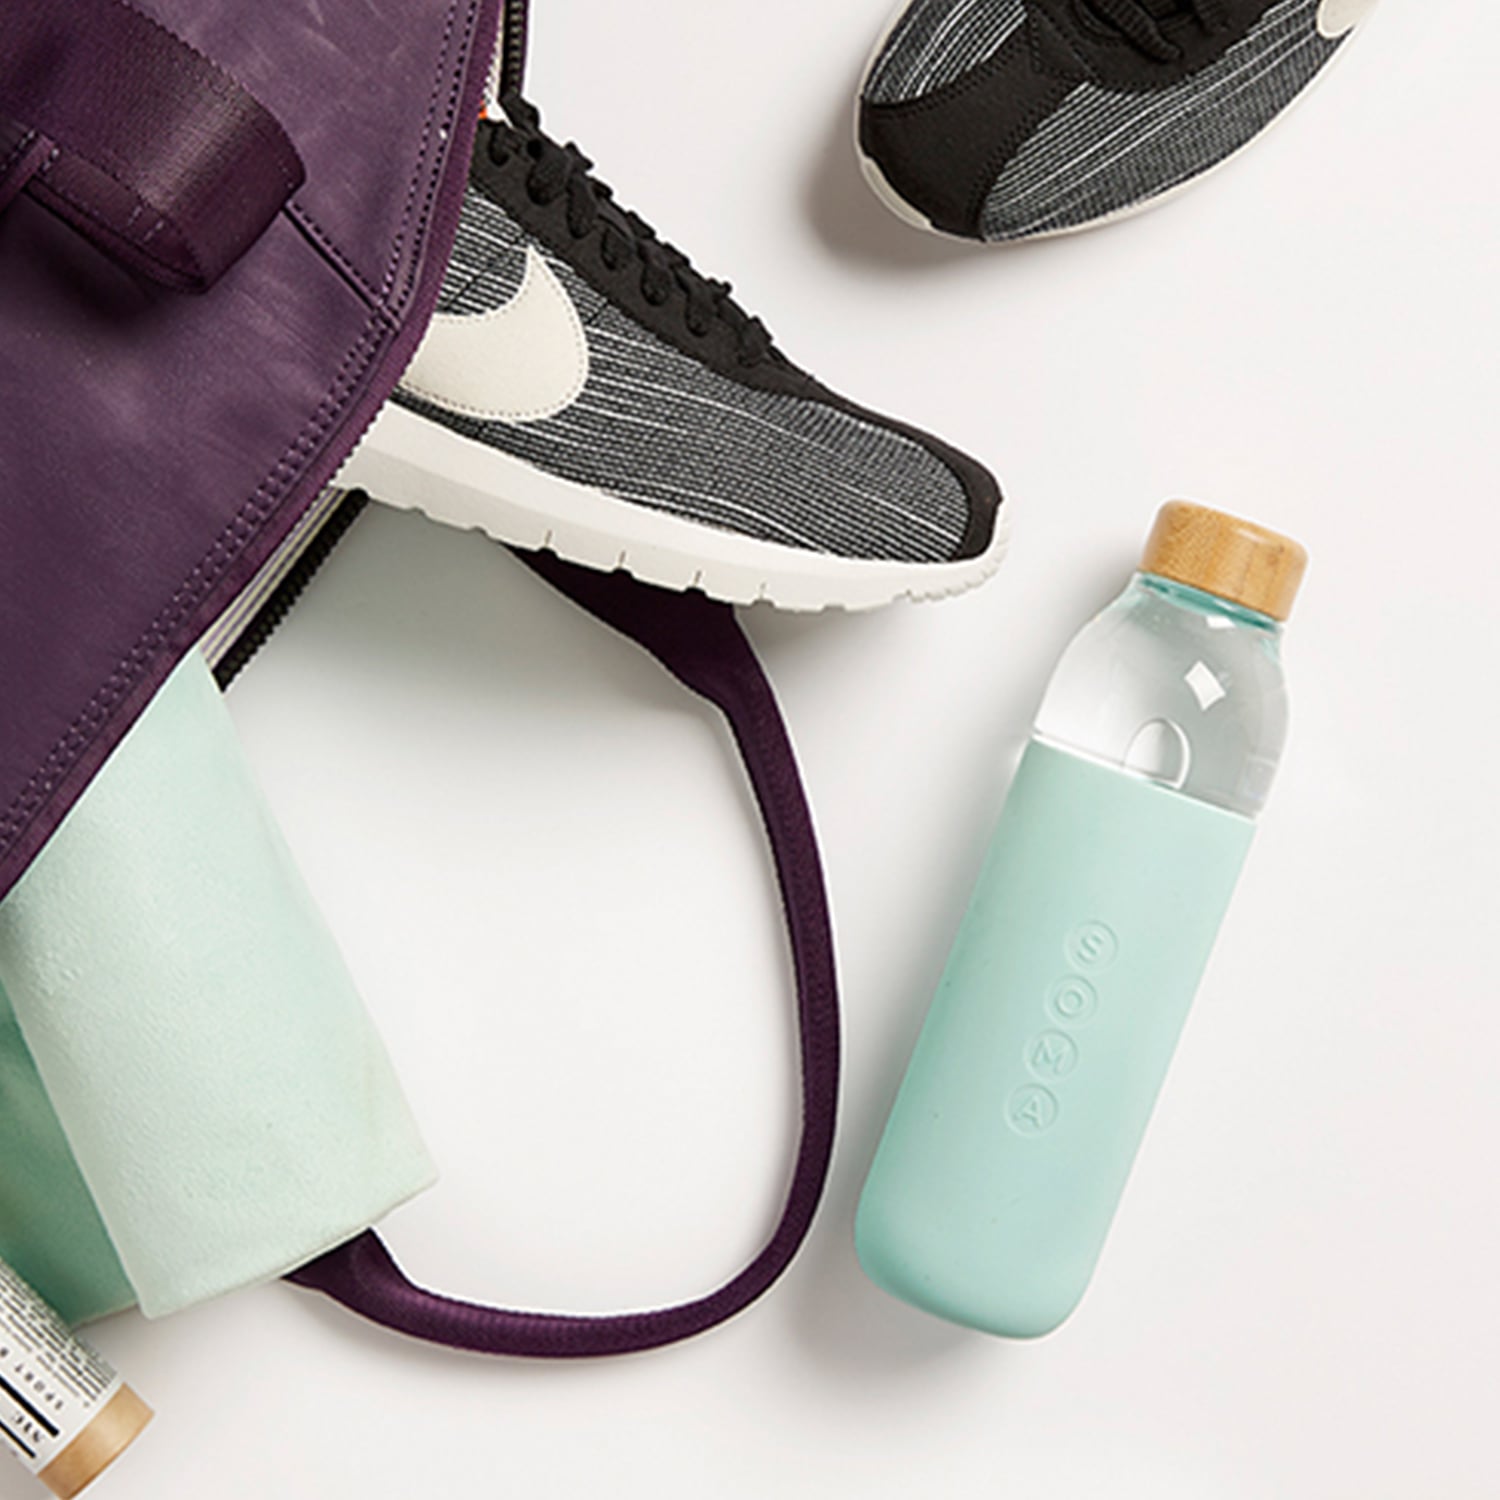 1L Bobble Bottle Filtered Water Sports Cap Drinking BPA Free Yoga Gym Workout 